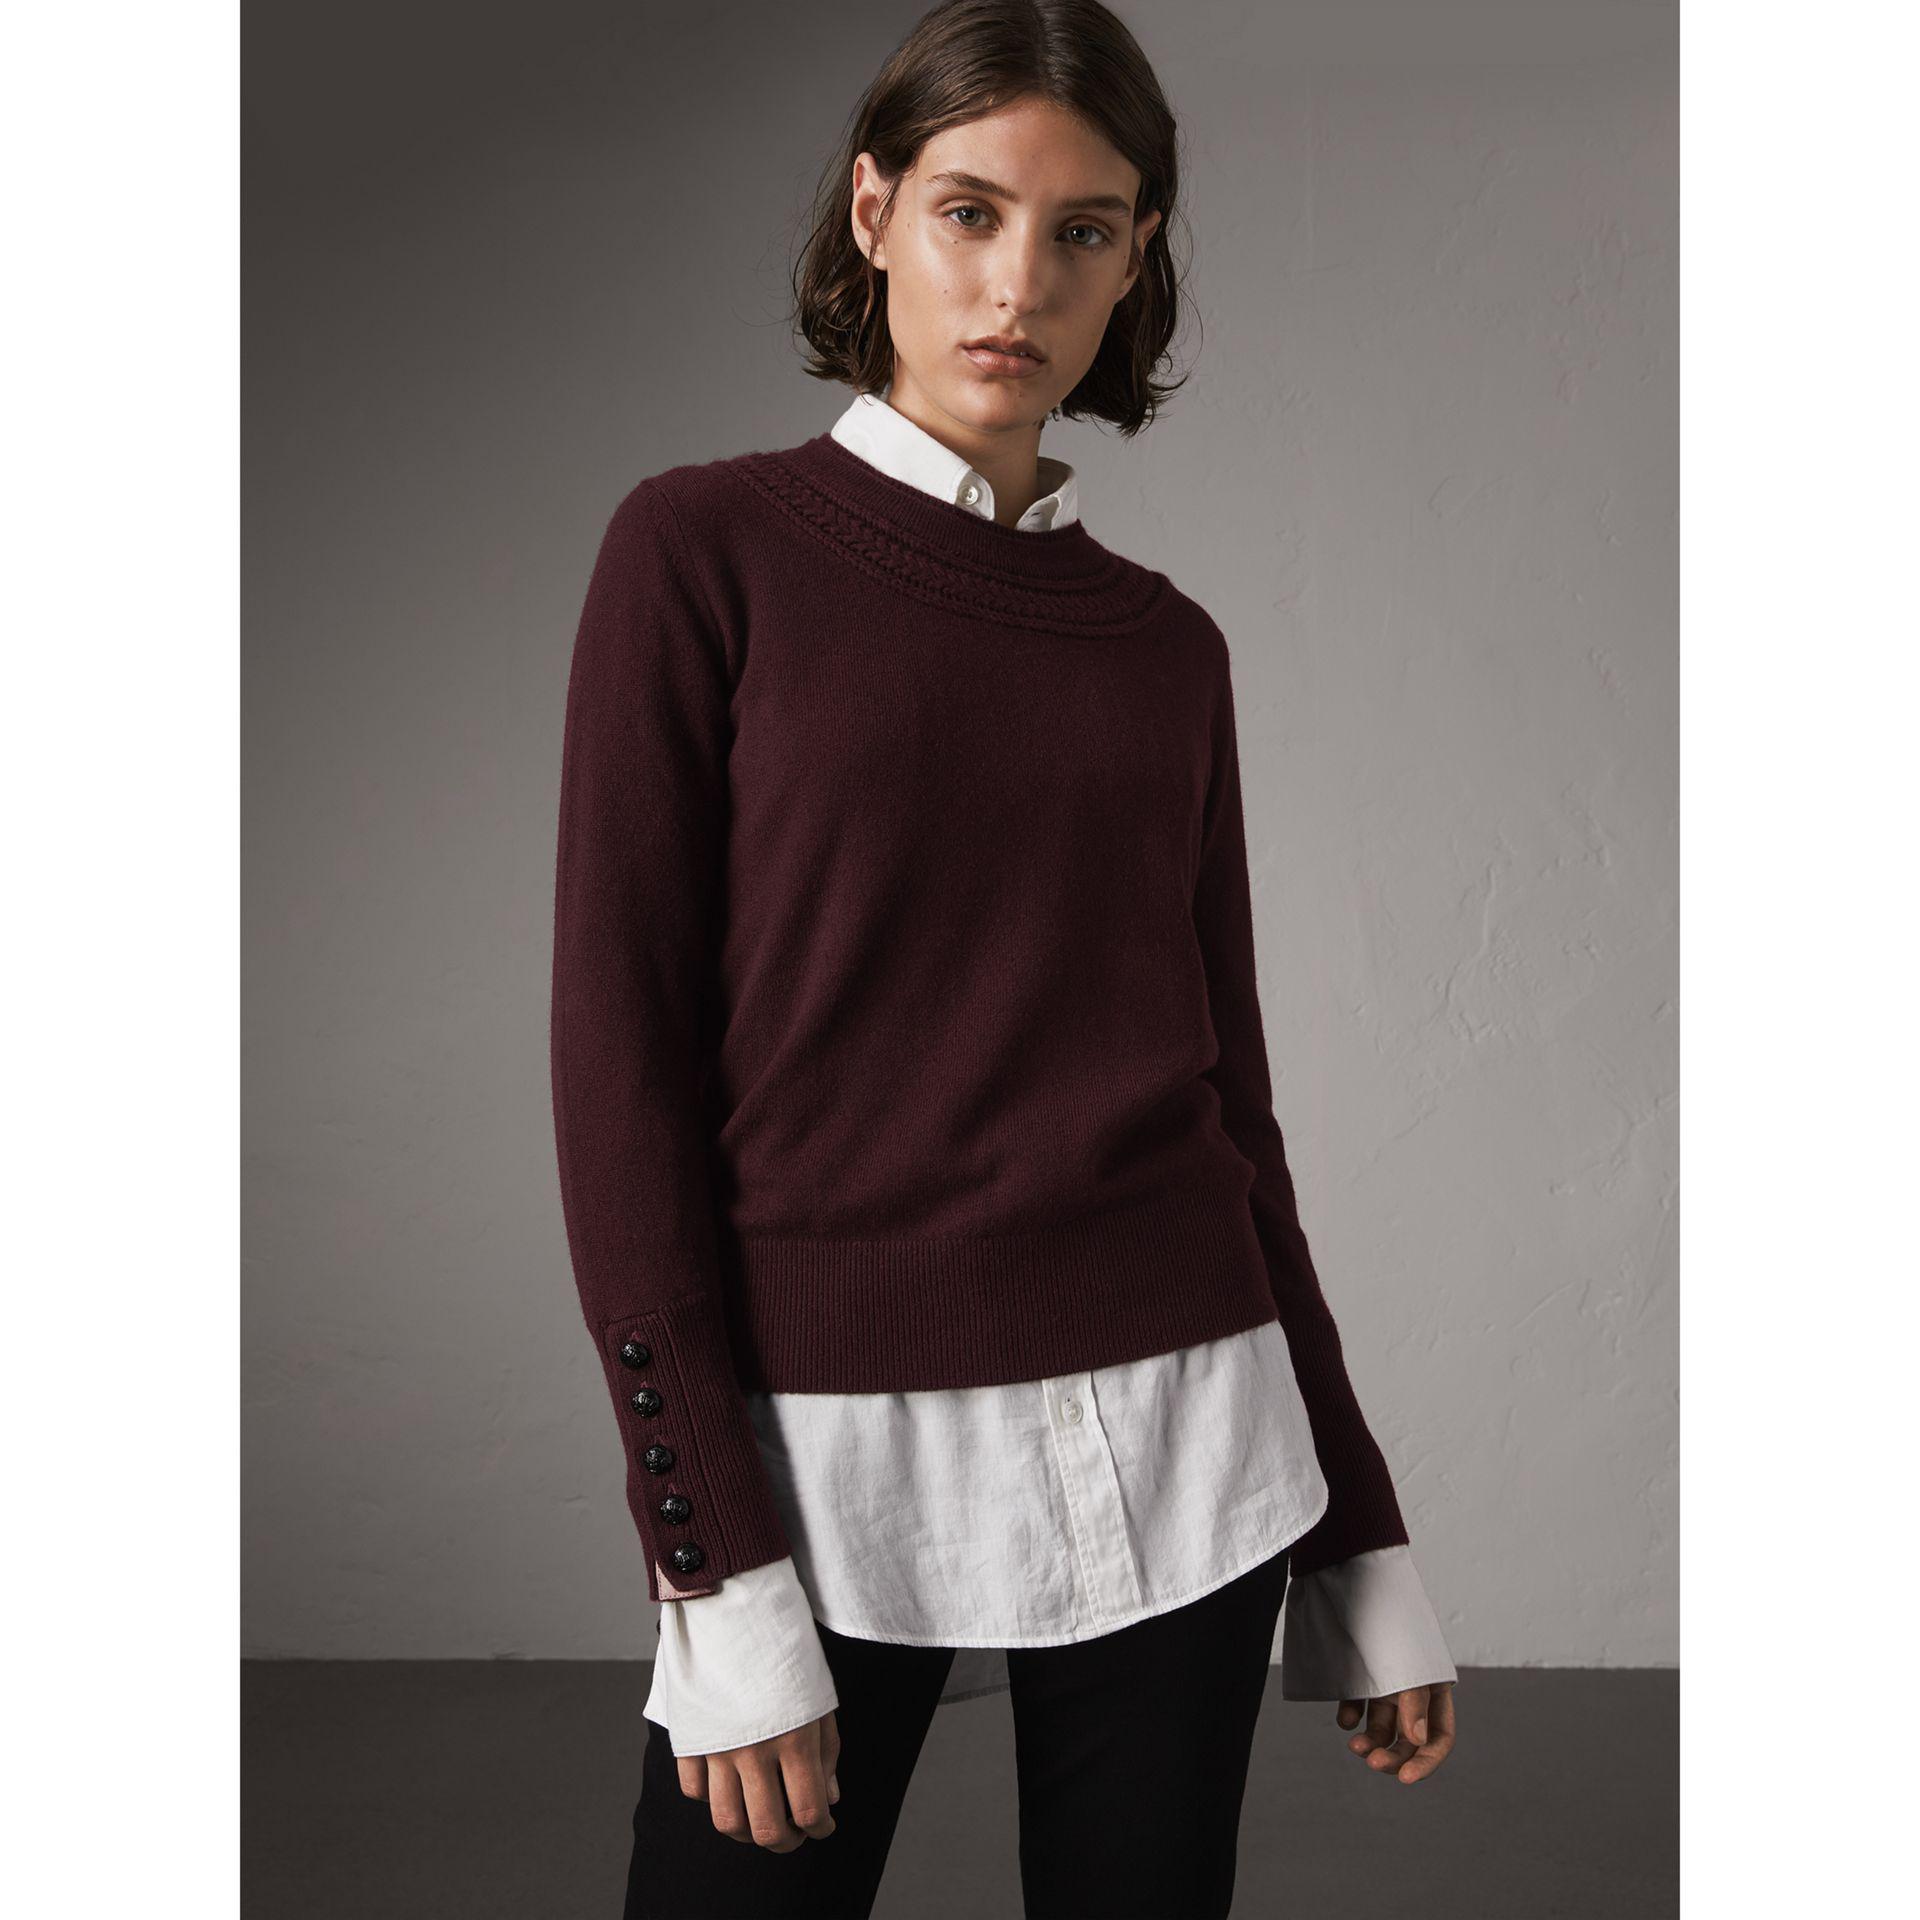 burberry cashmere sweater sale